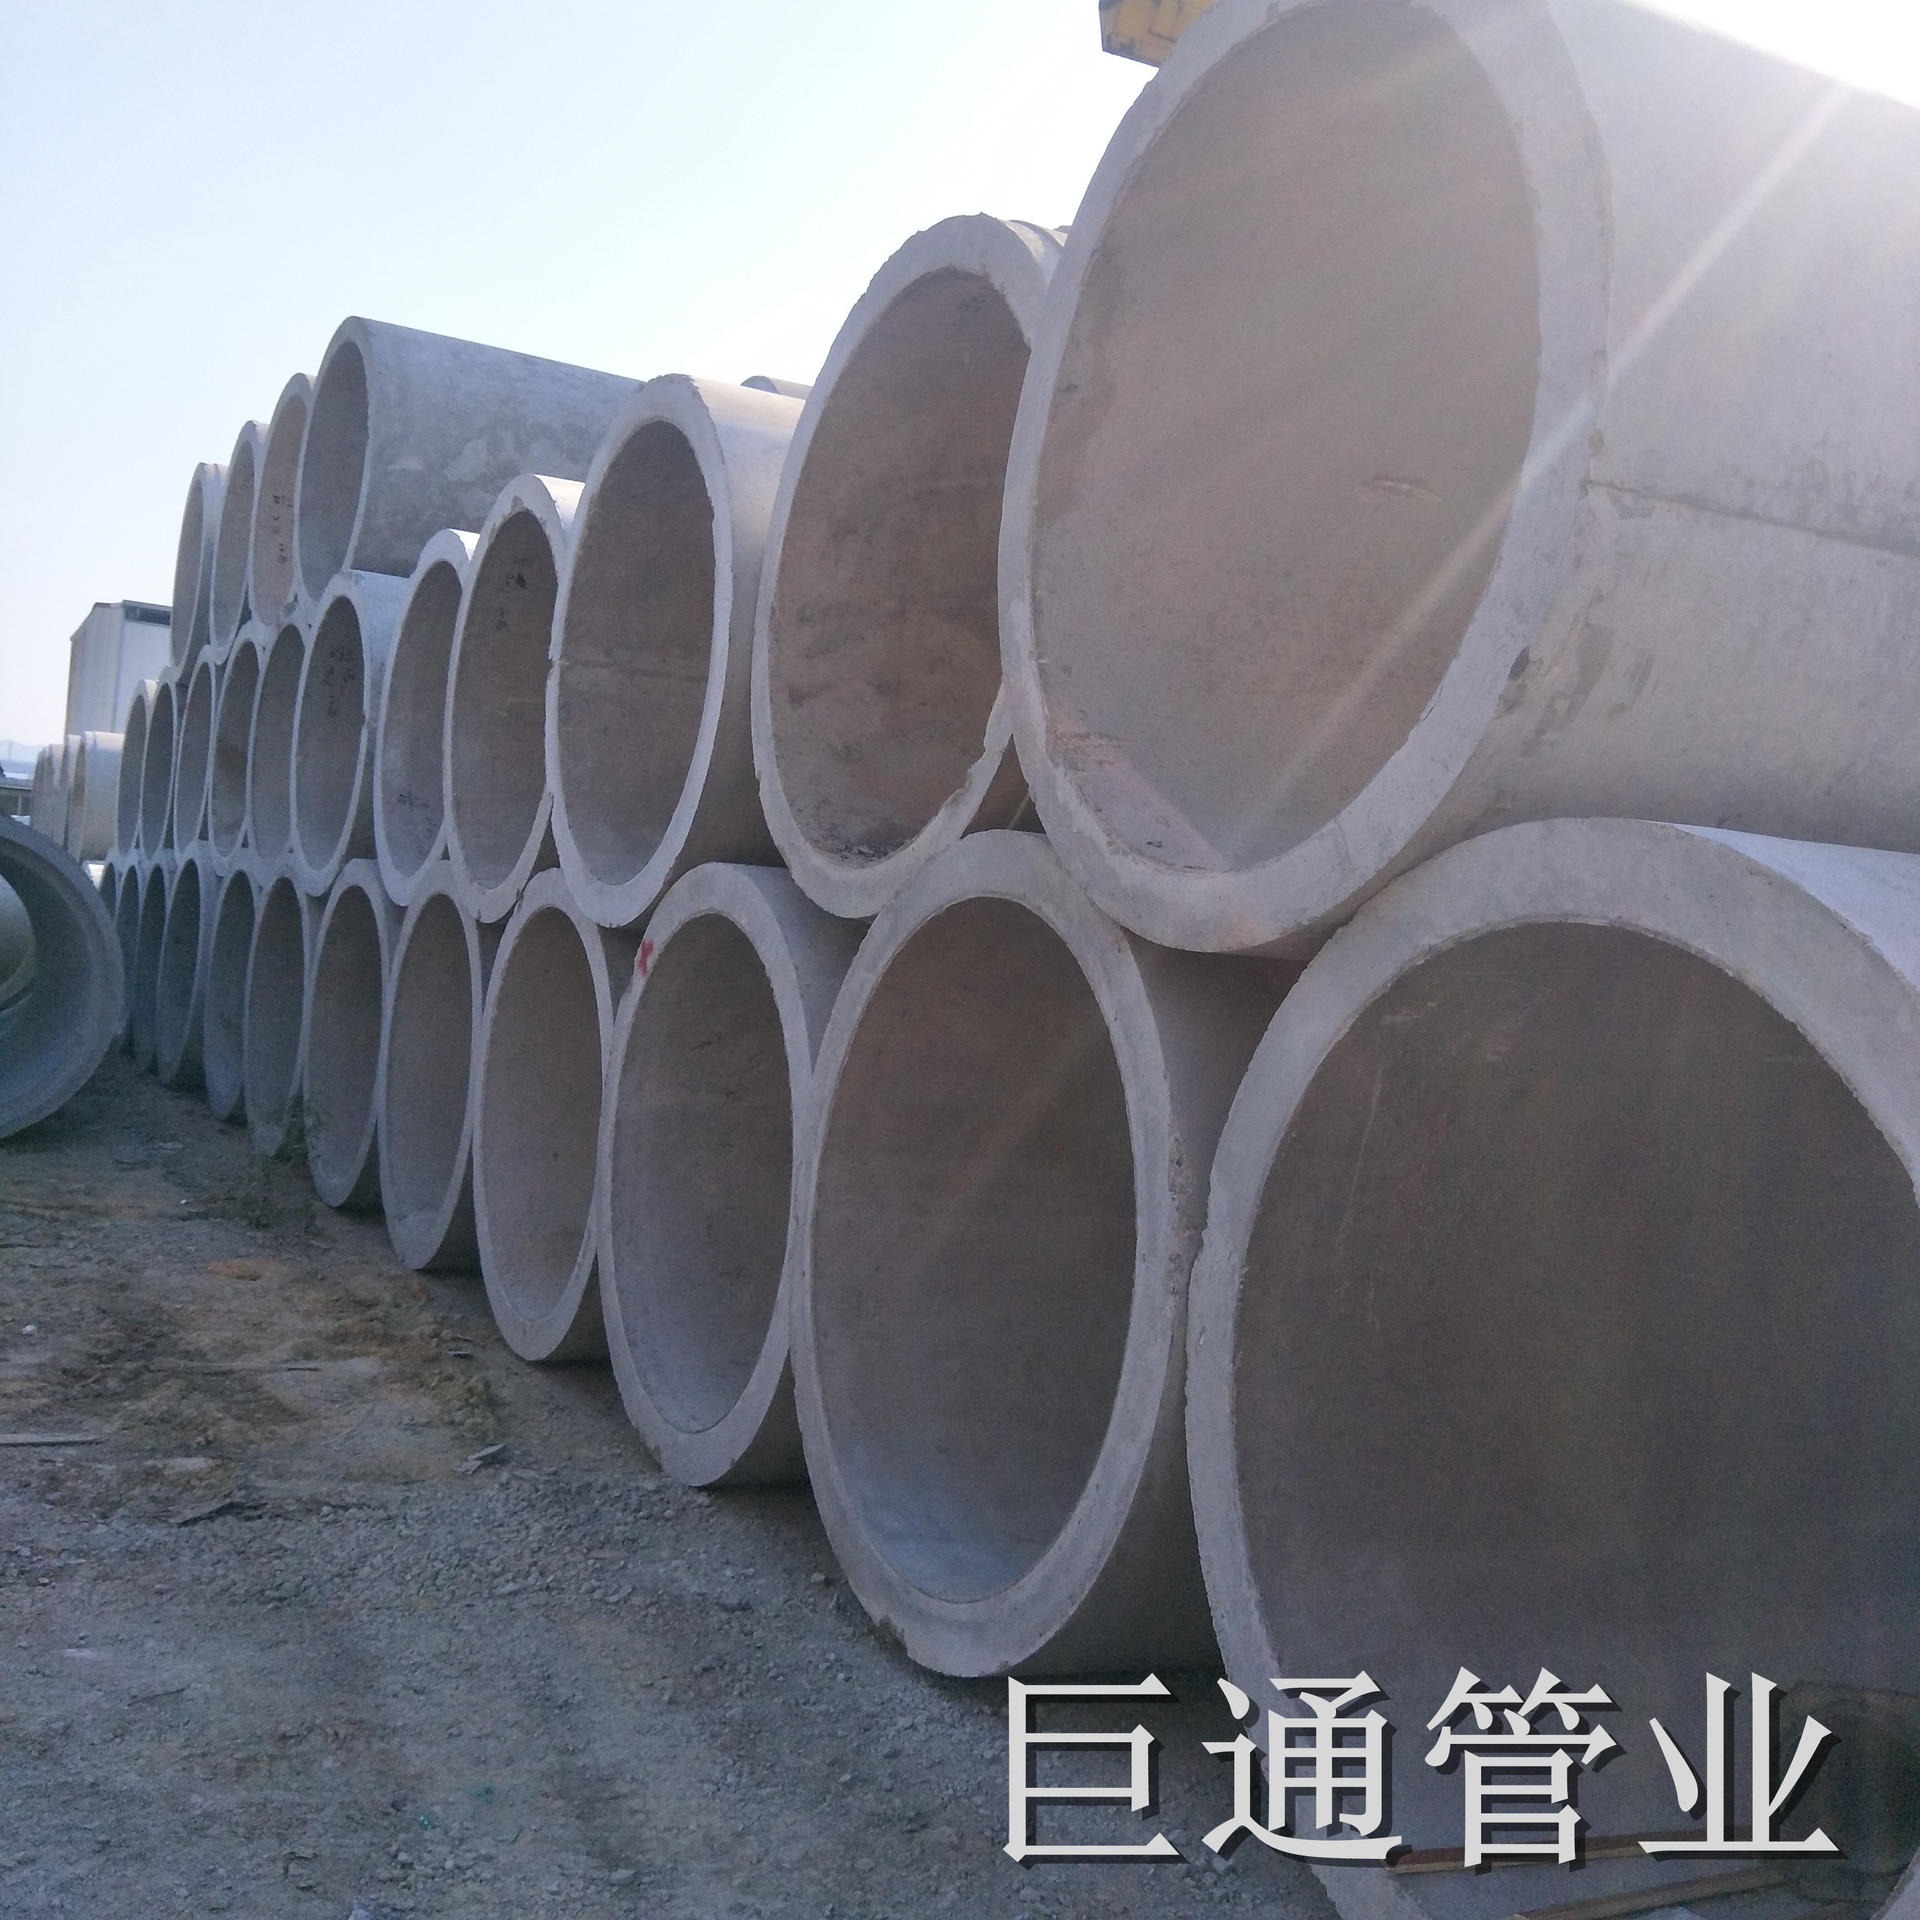 30002000lllF型钢承口管 顶管 钢筋混凝土排水管 压力管 砼管